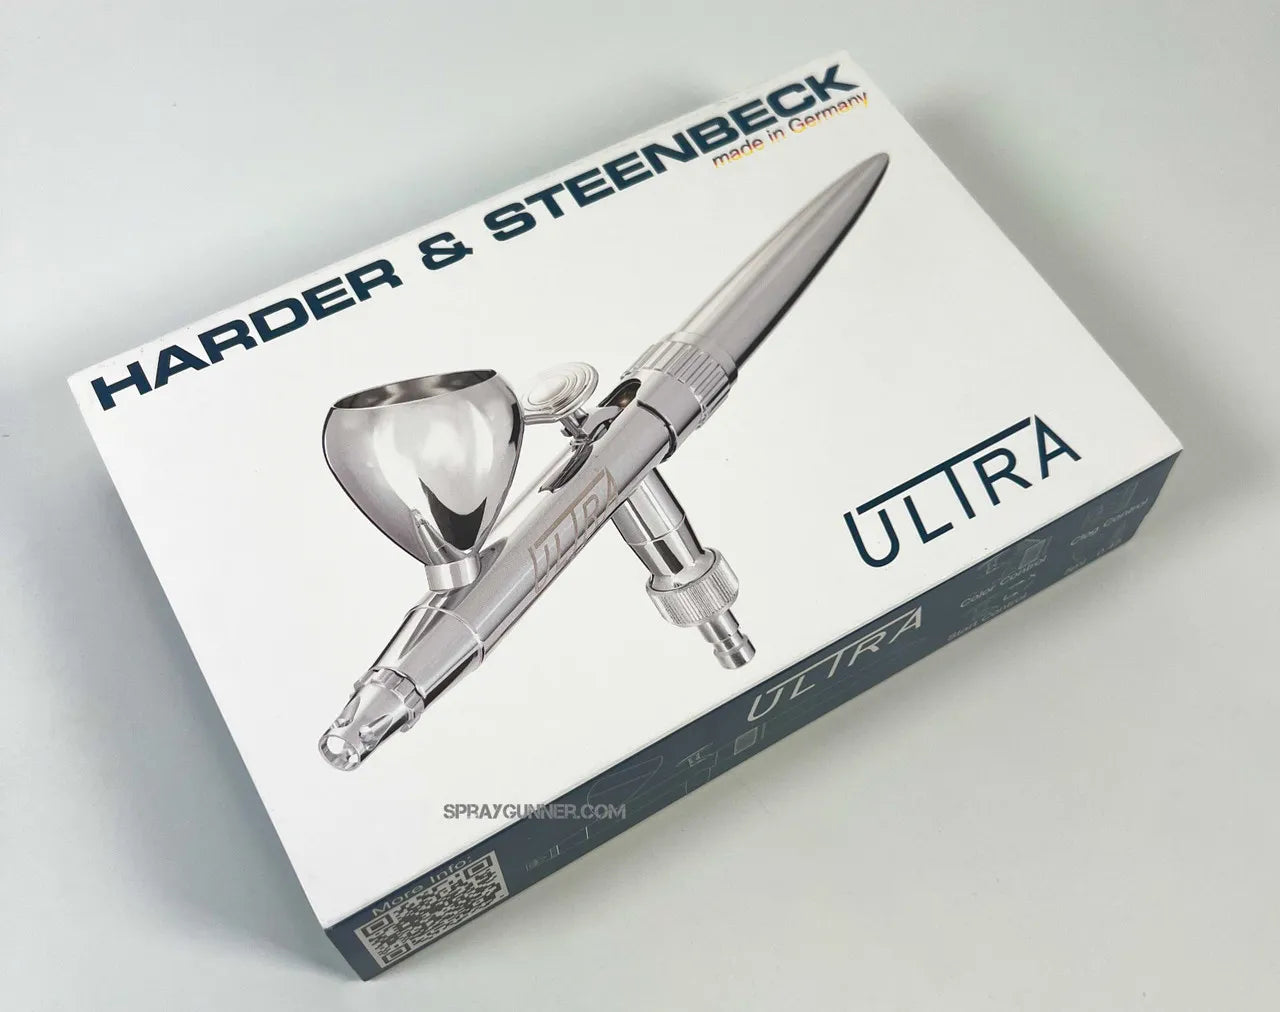 120231 - ULTRA 2024 - Harder and Steenbeck